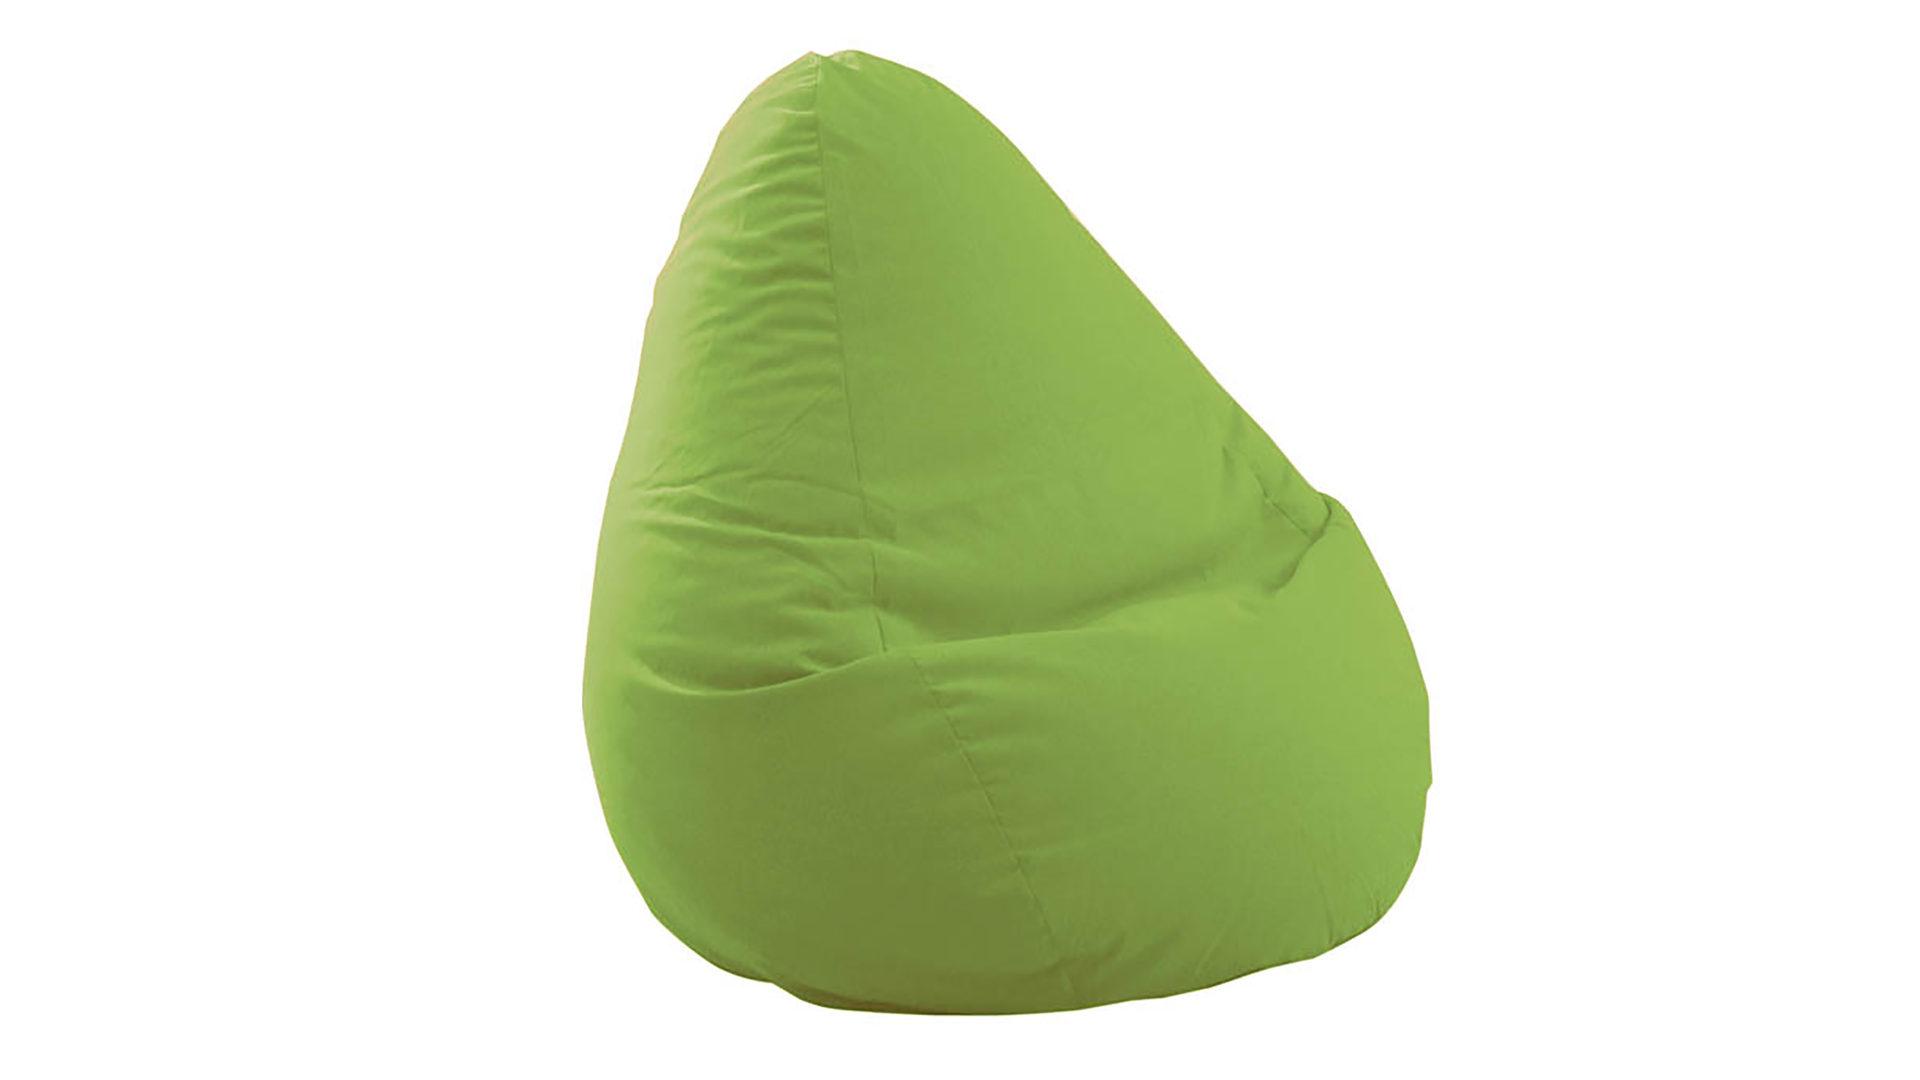 Standard-Sitzsack Magma sitting point aus Stoff in Grün SITTING POINT Sitzsack Easy XL als Sitzmöbel grüner Mikrofaserbezug - ca. 220 Liter